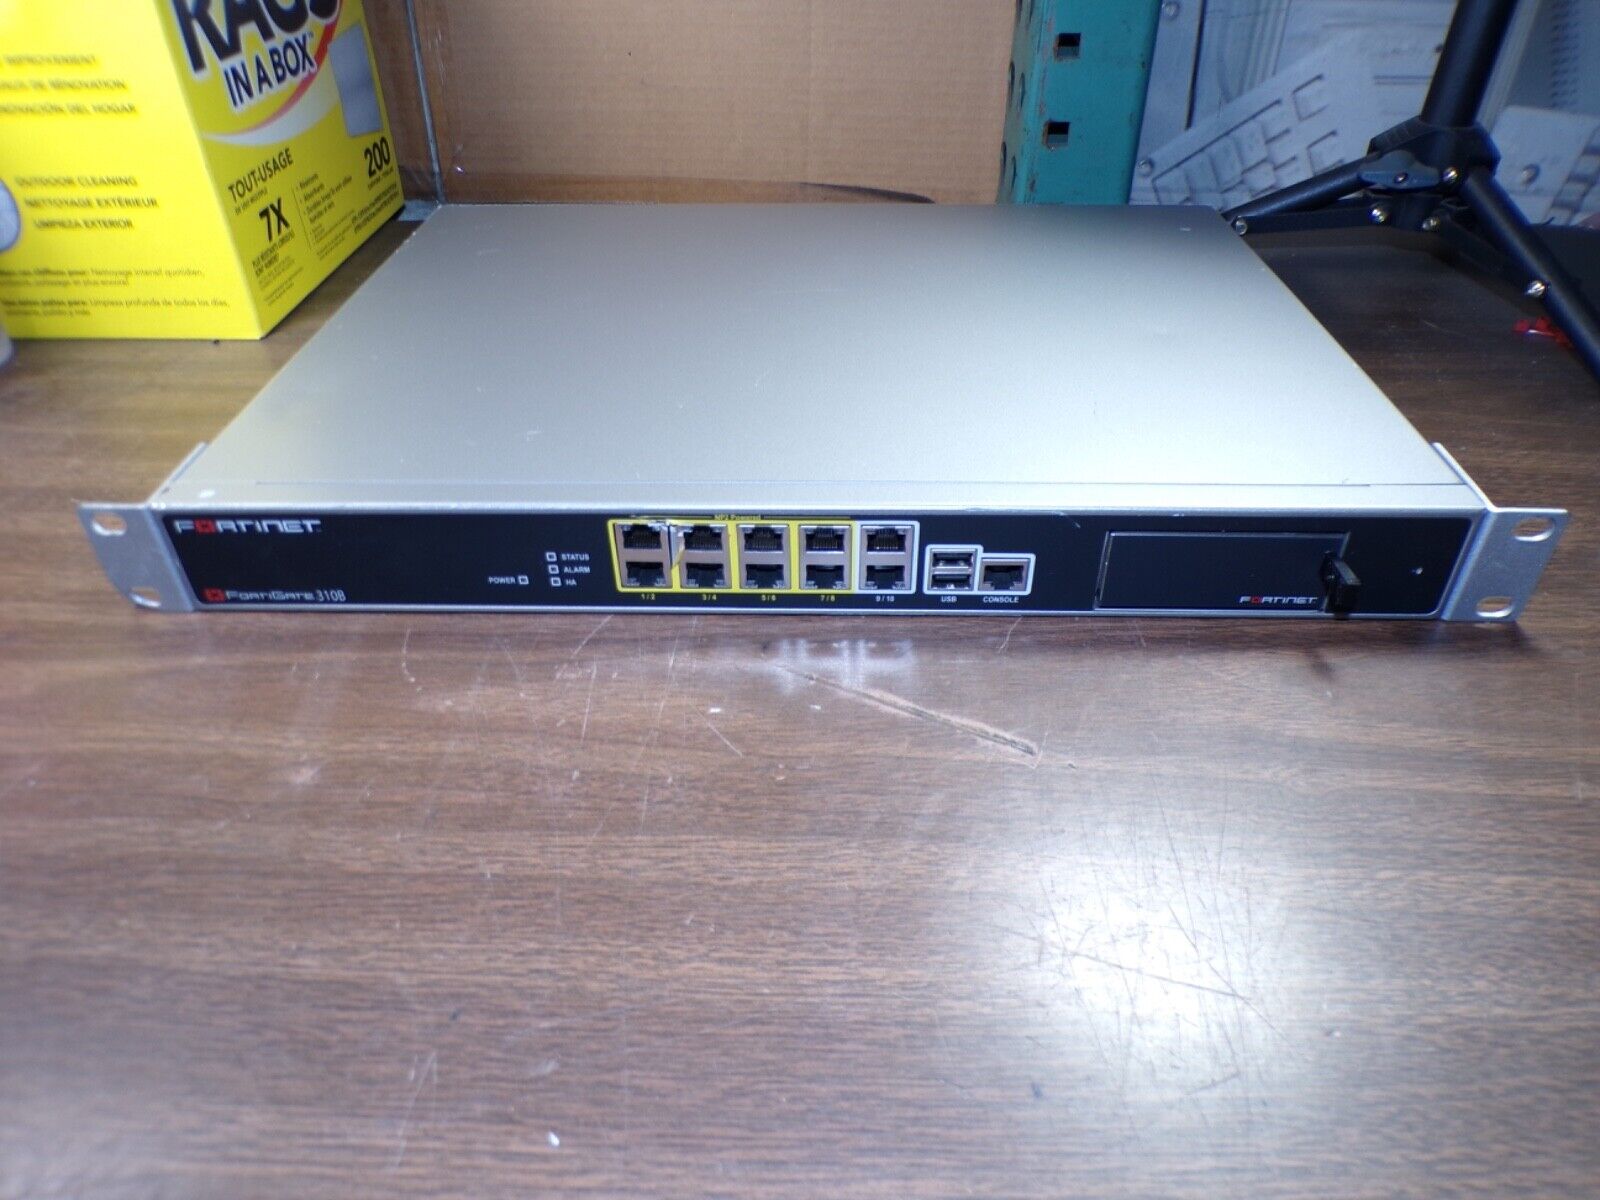 Fortinet Fortigate 310B FG-310B 10x 1GbE RJ45 Firewall Security Appliance